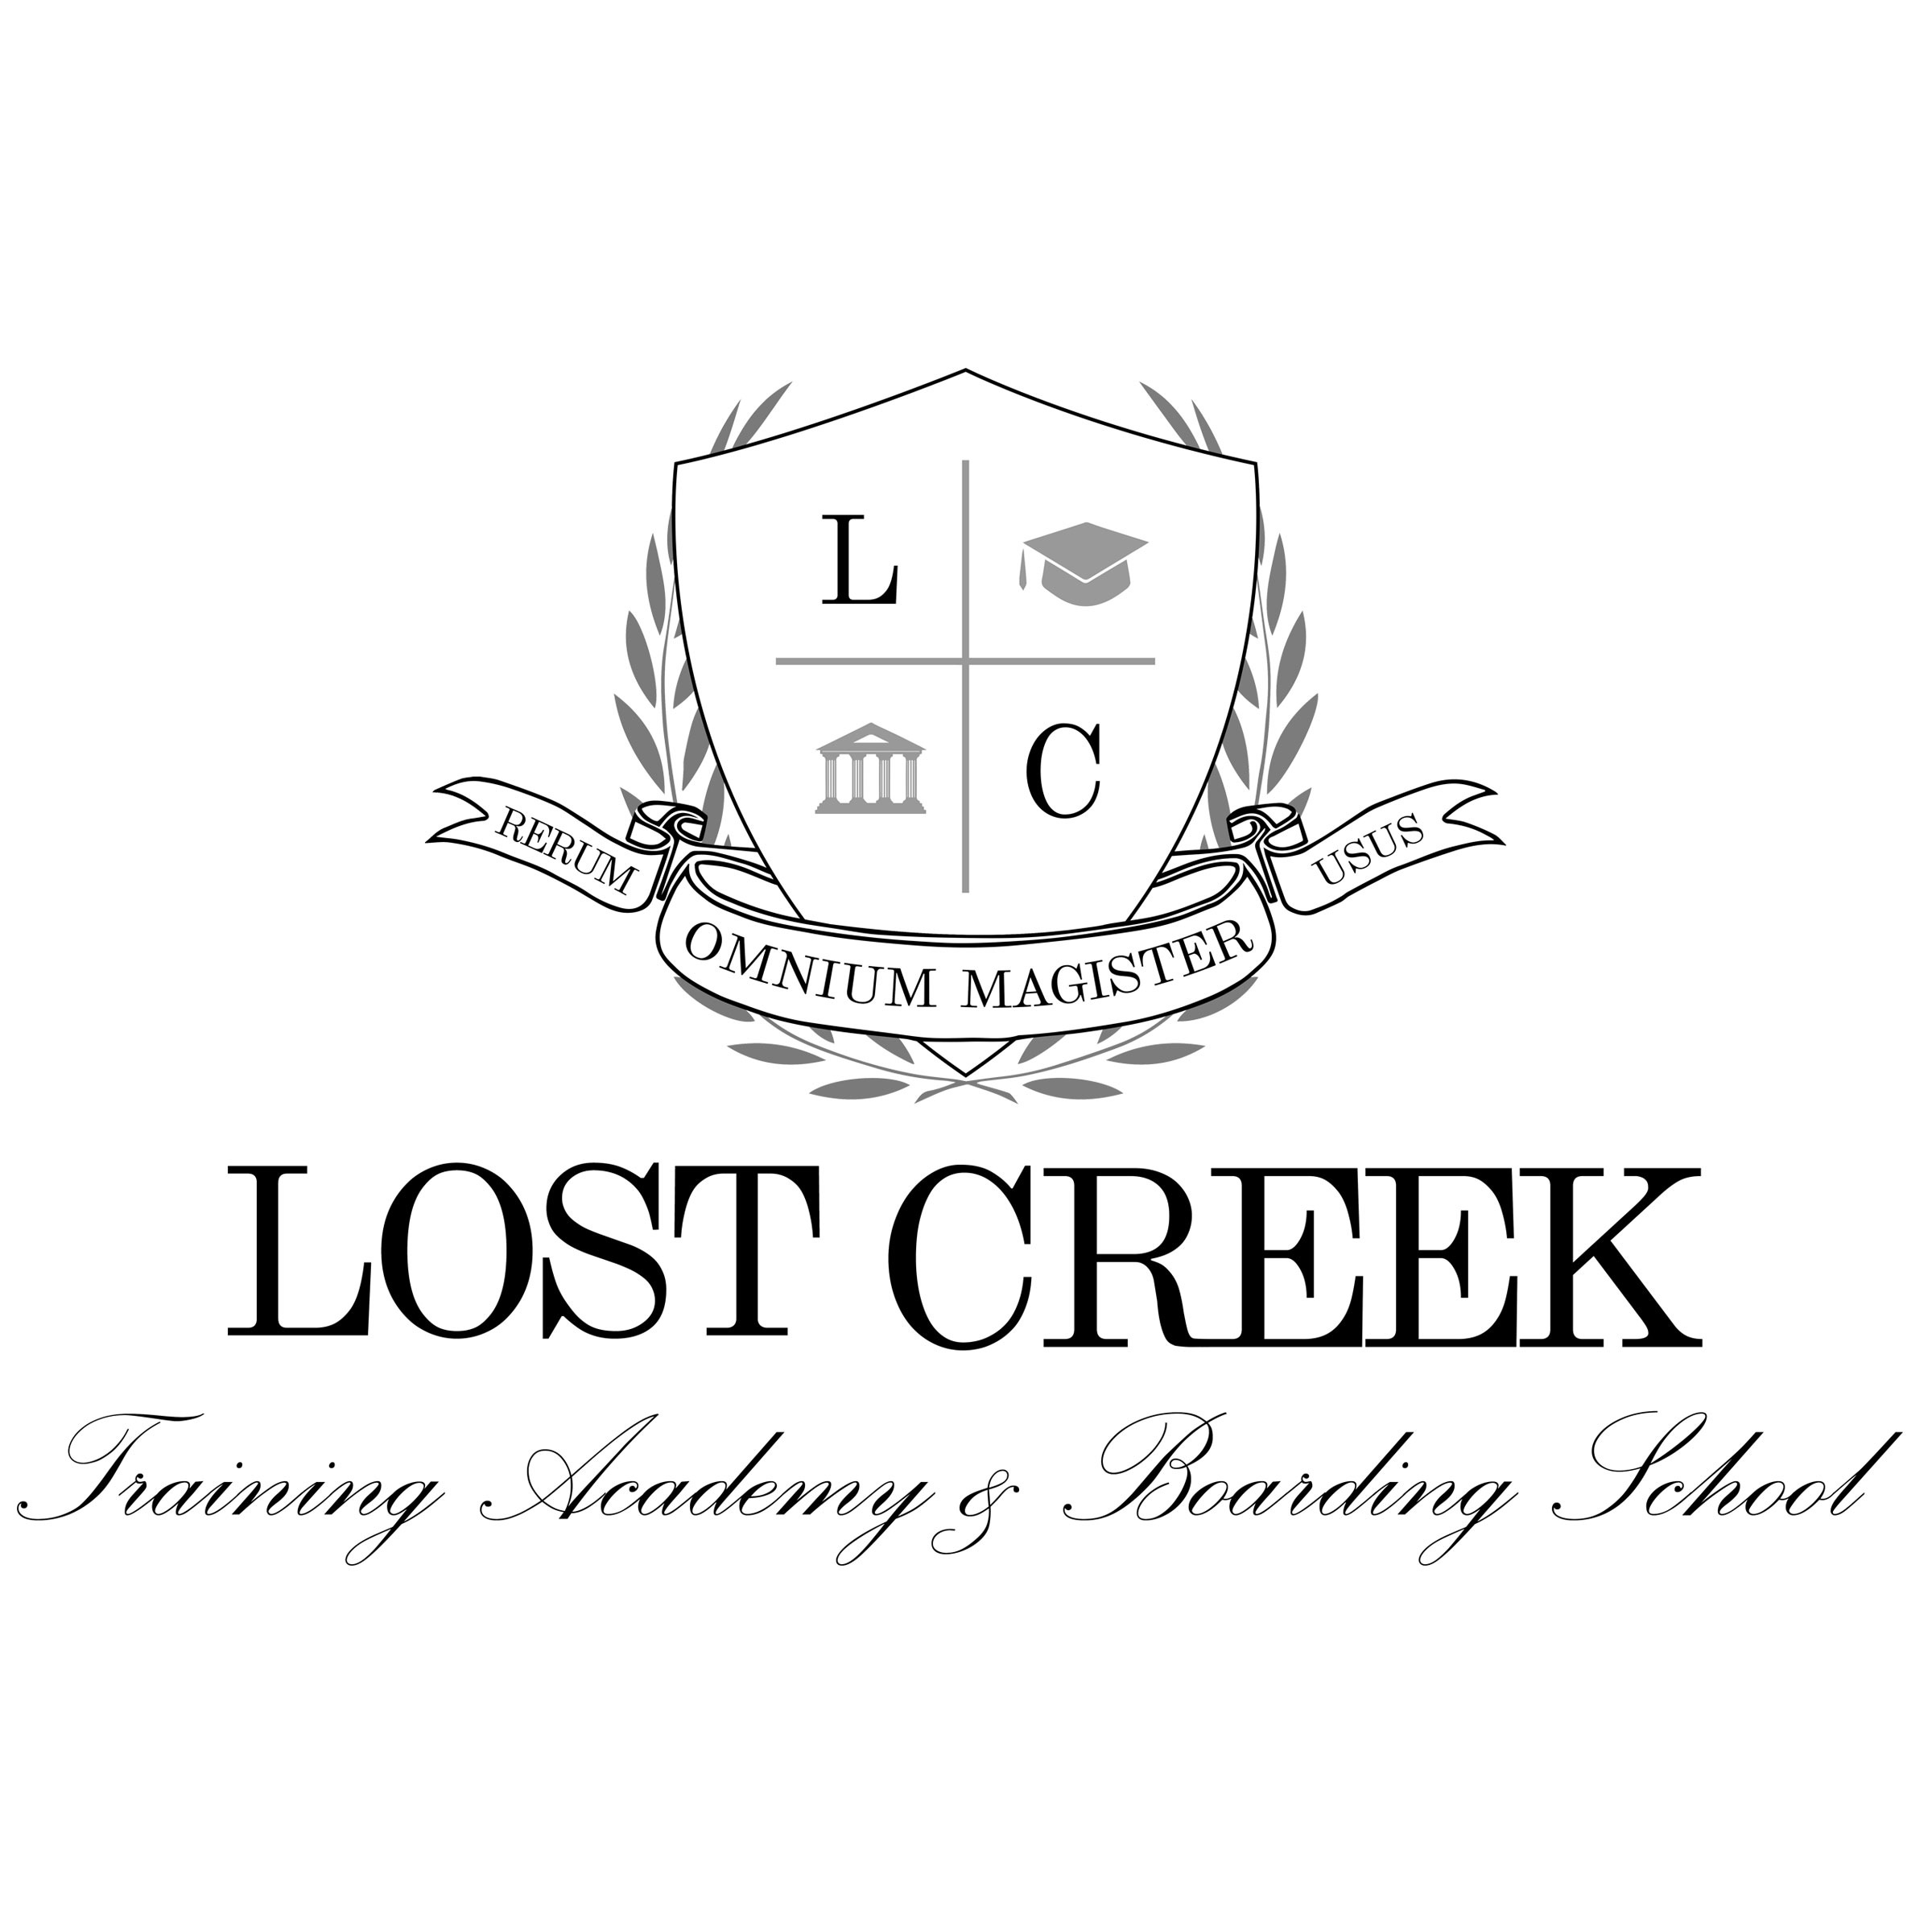 LOST CREEK TRAINING ACADEMY & BOARDING SCHOOL